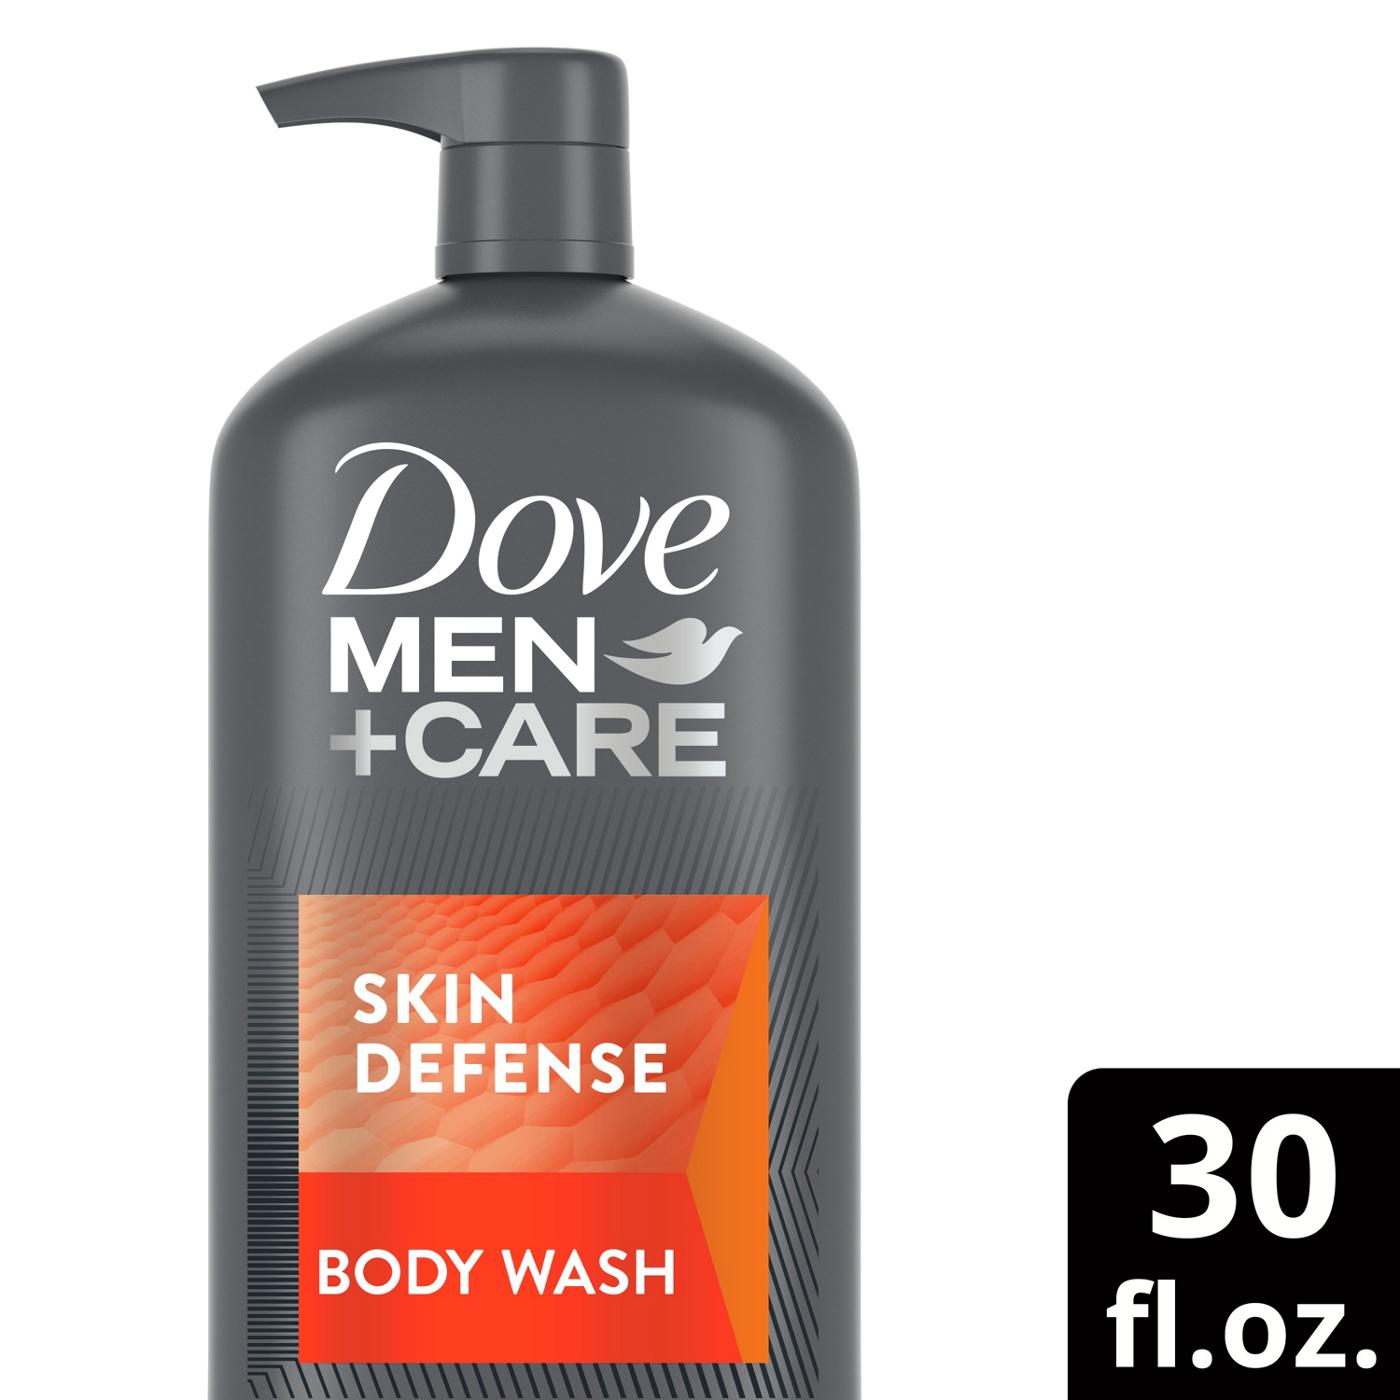 Dove Men+Care Body Wash - Skin Defense; image 3 of 3